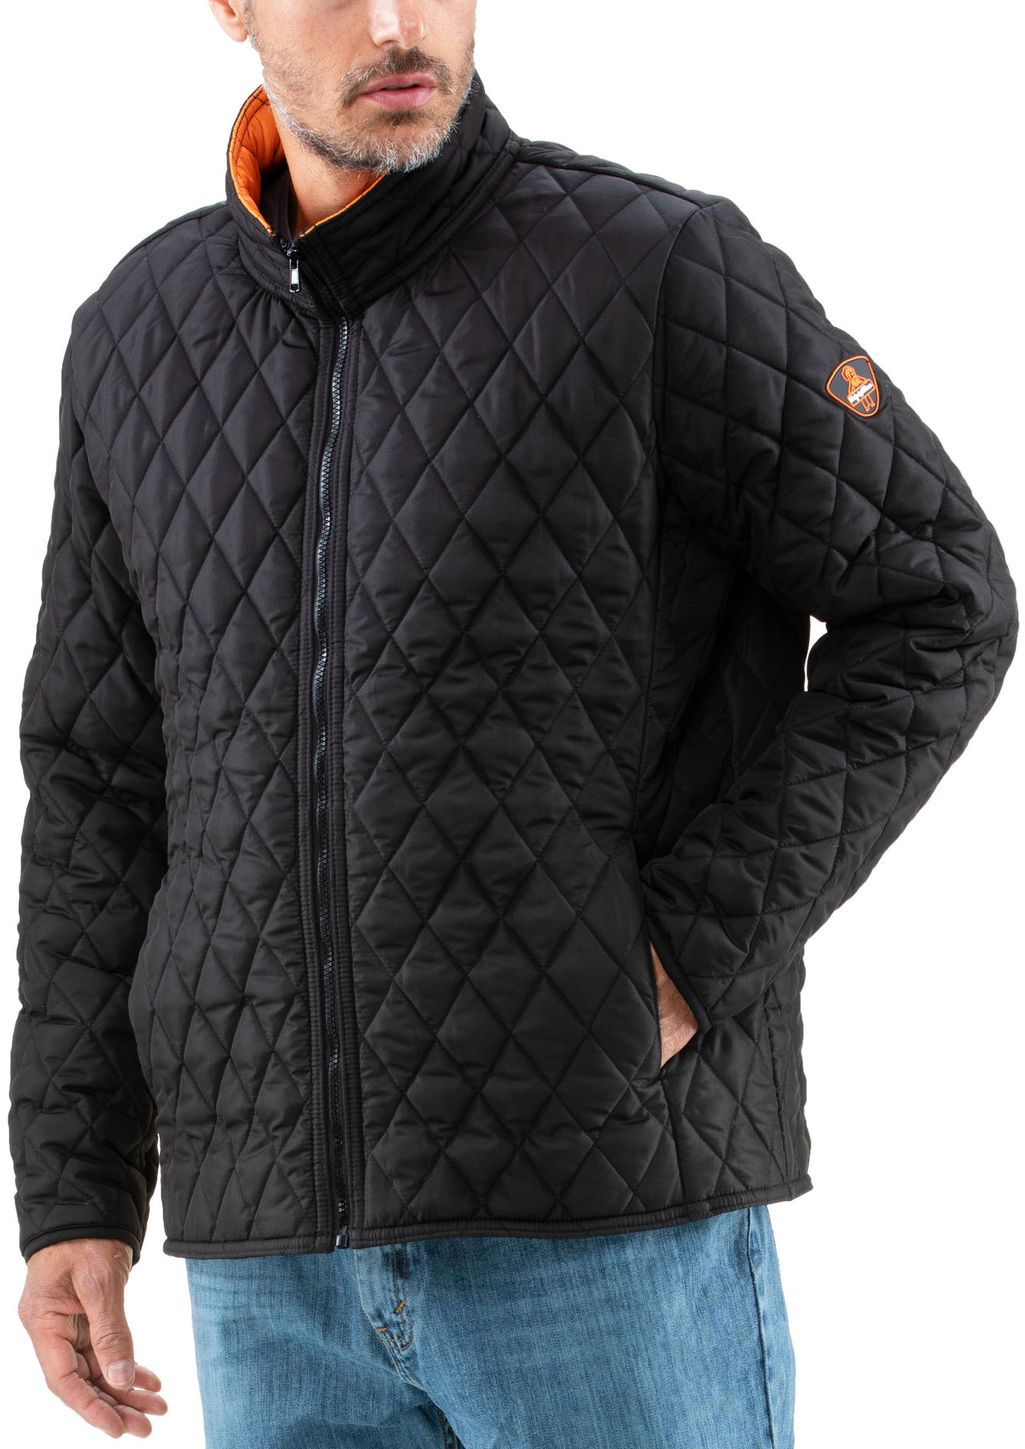 Refrigiwear 8705Rblklar Unisex Black Polyester Jacket Size L 